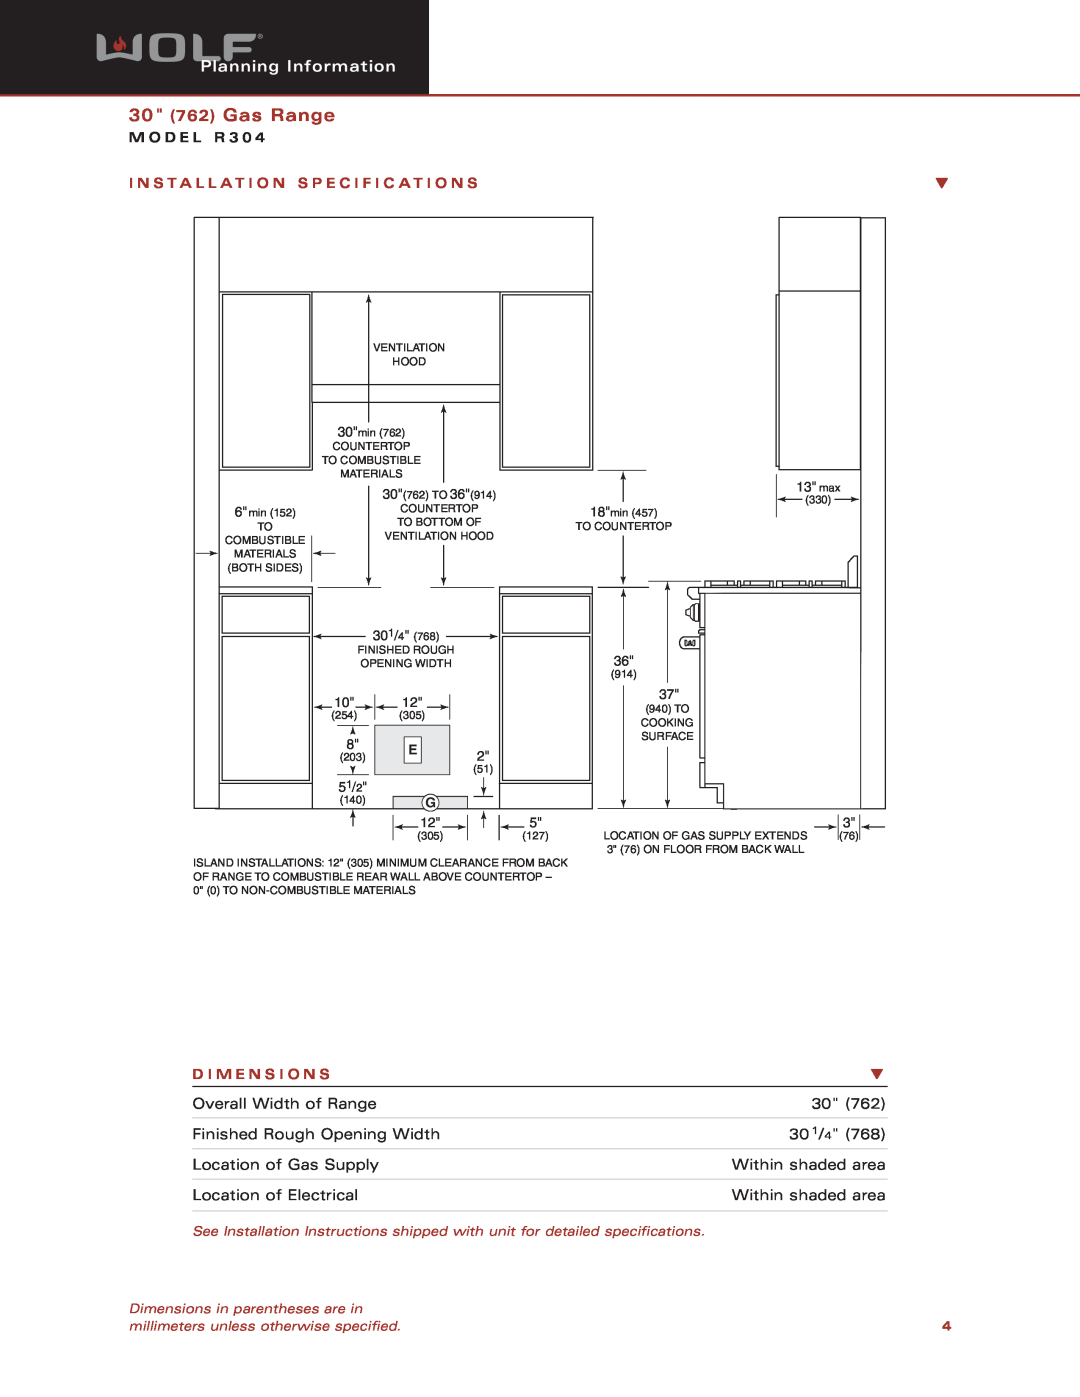 Wolf Appliance Company R304 dimensions 30 762 Gas Range, Planning Information, M O D E L, D I M E N S I O N S 